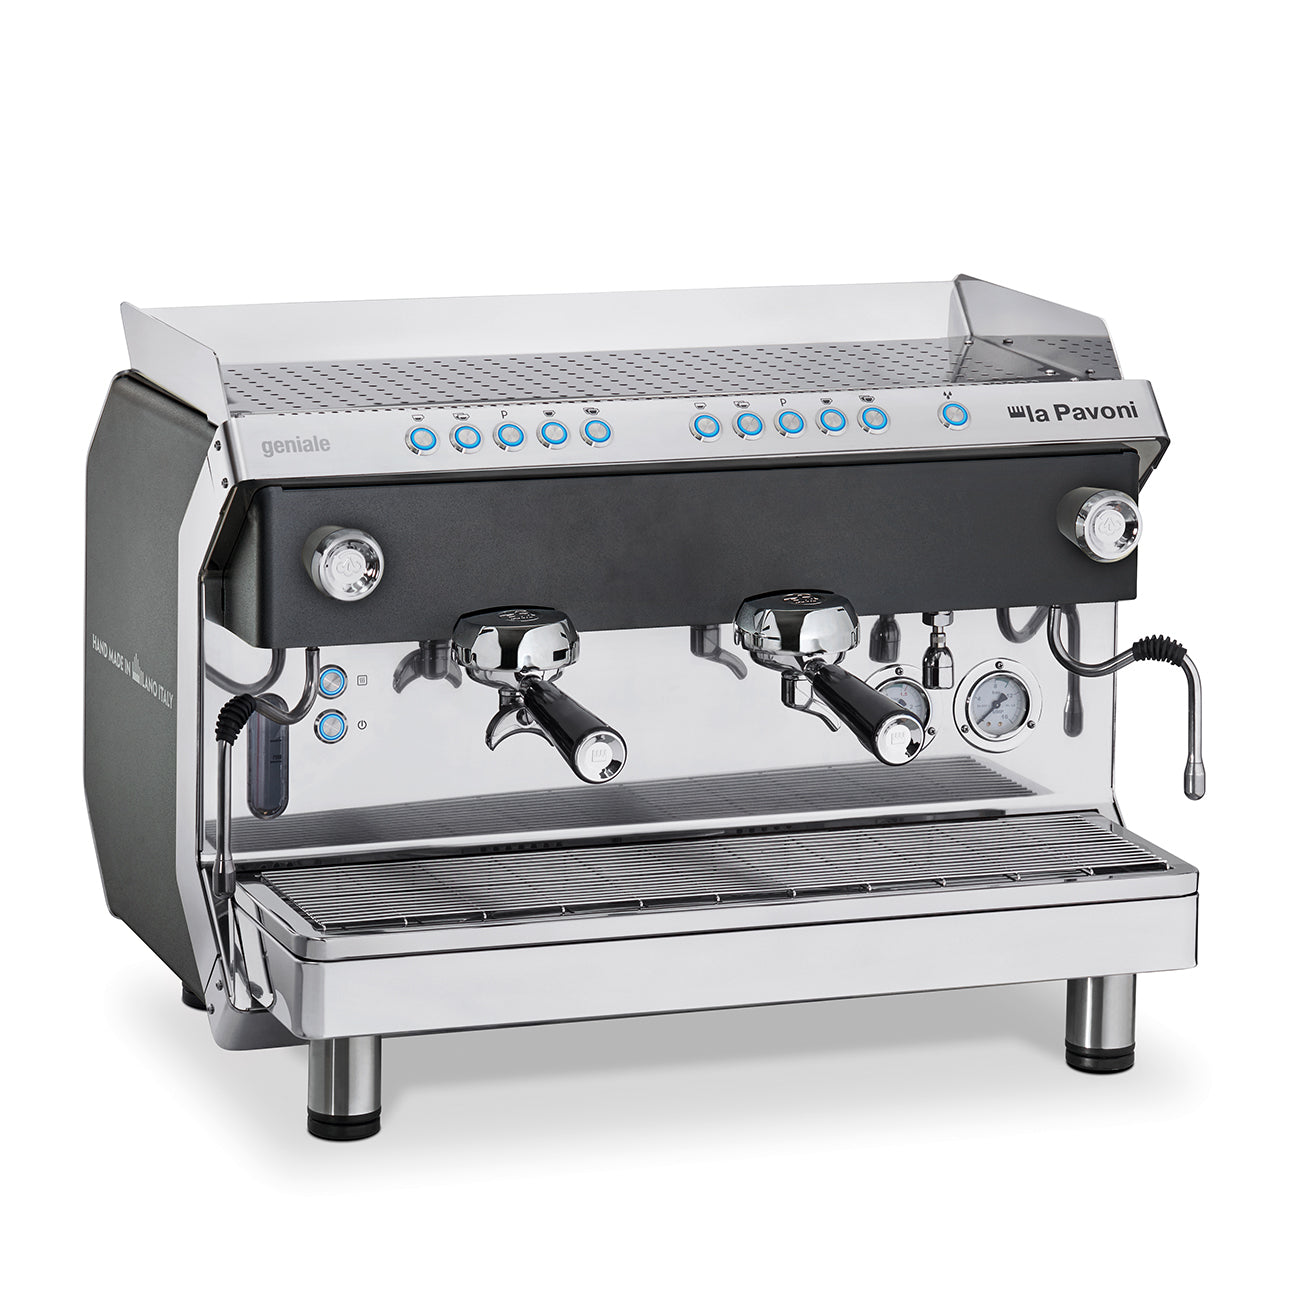 La Pavoni - GENIALE 2V 2 Group Automatic Espresso Coffee machine JD Catering Equipment Solutions Ltd